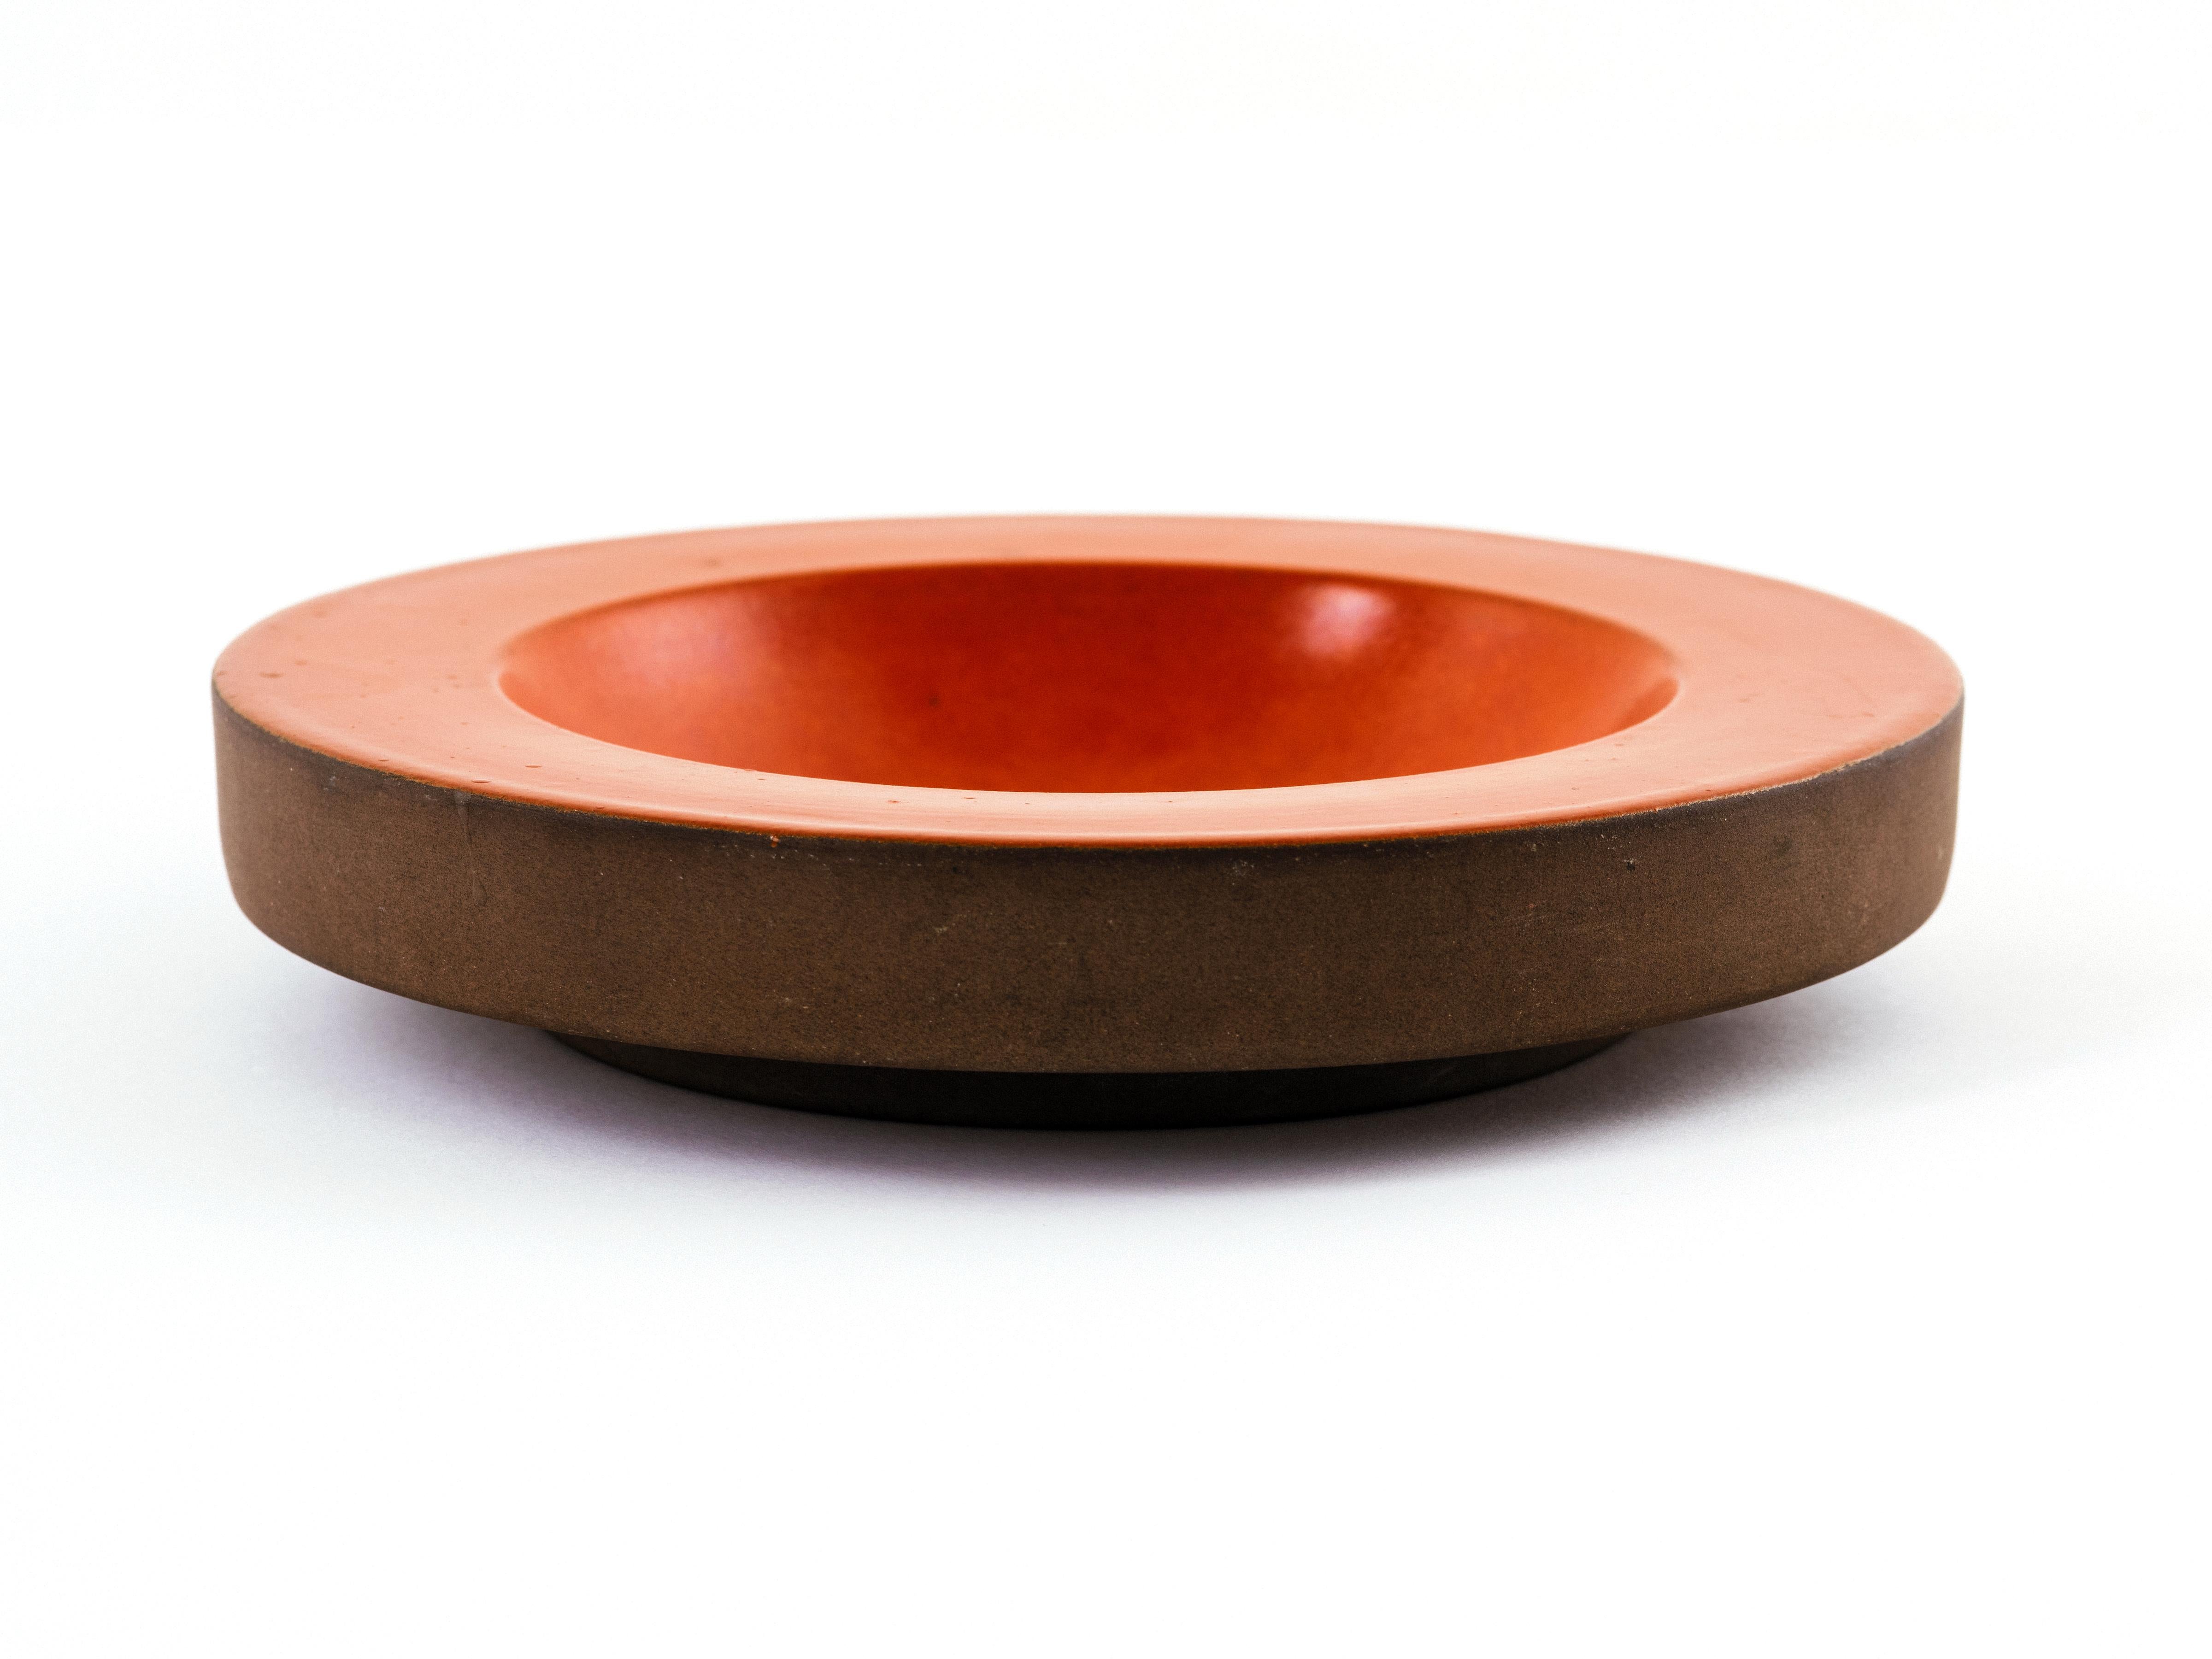 Mid-Century Modern Design Technics Floating Low Ceramic Bowl in Blood Orange Glaze, 1960s